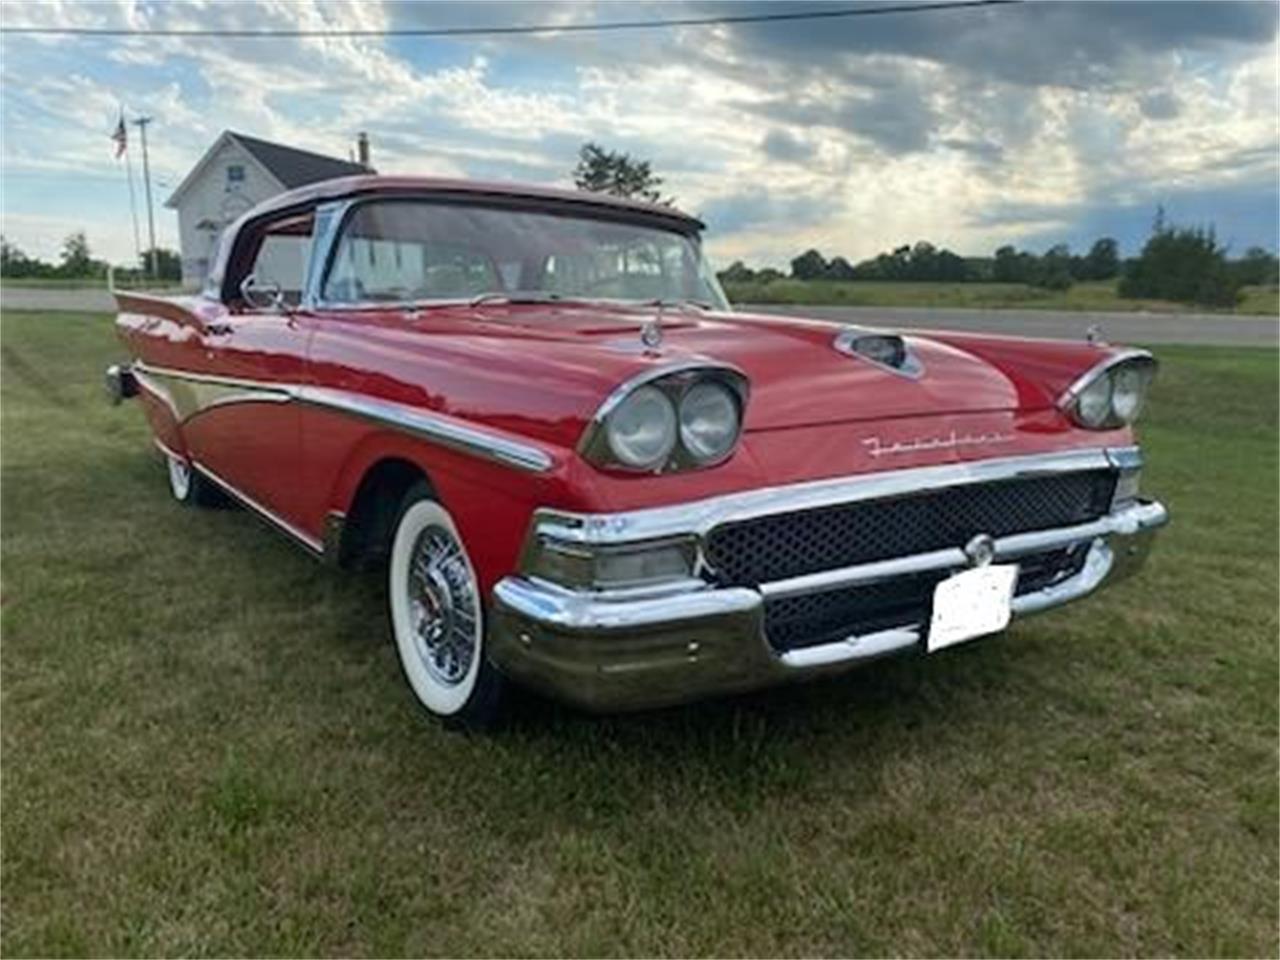 For Sale: 1958 Ford Fairlane 500 in Cadillac, Michigan for sale in Cadillac, MI